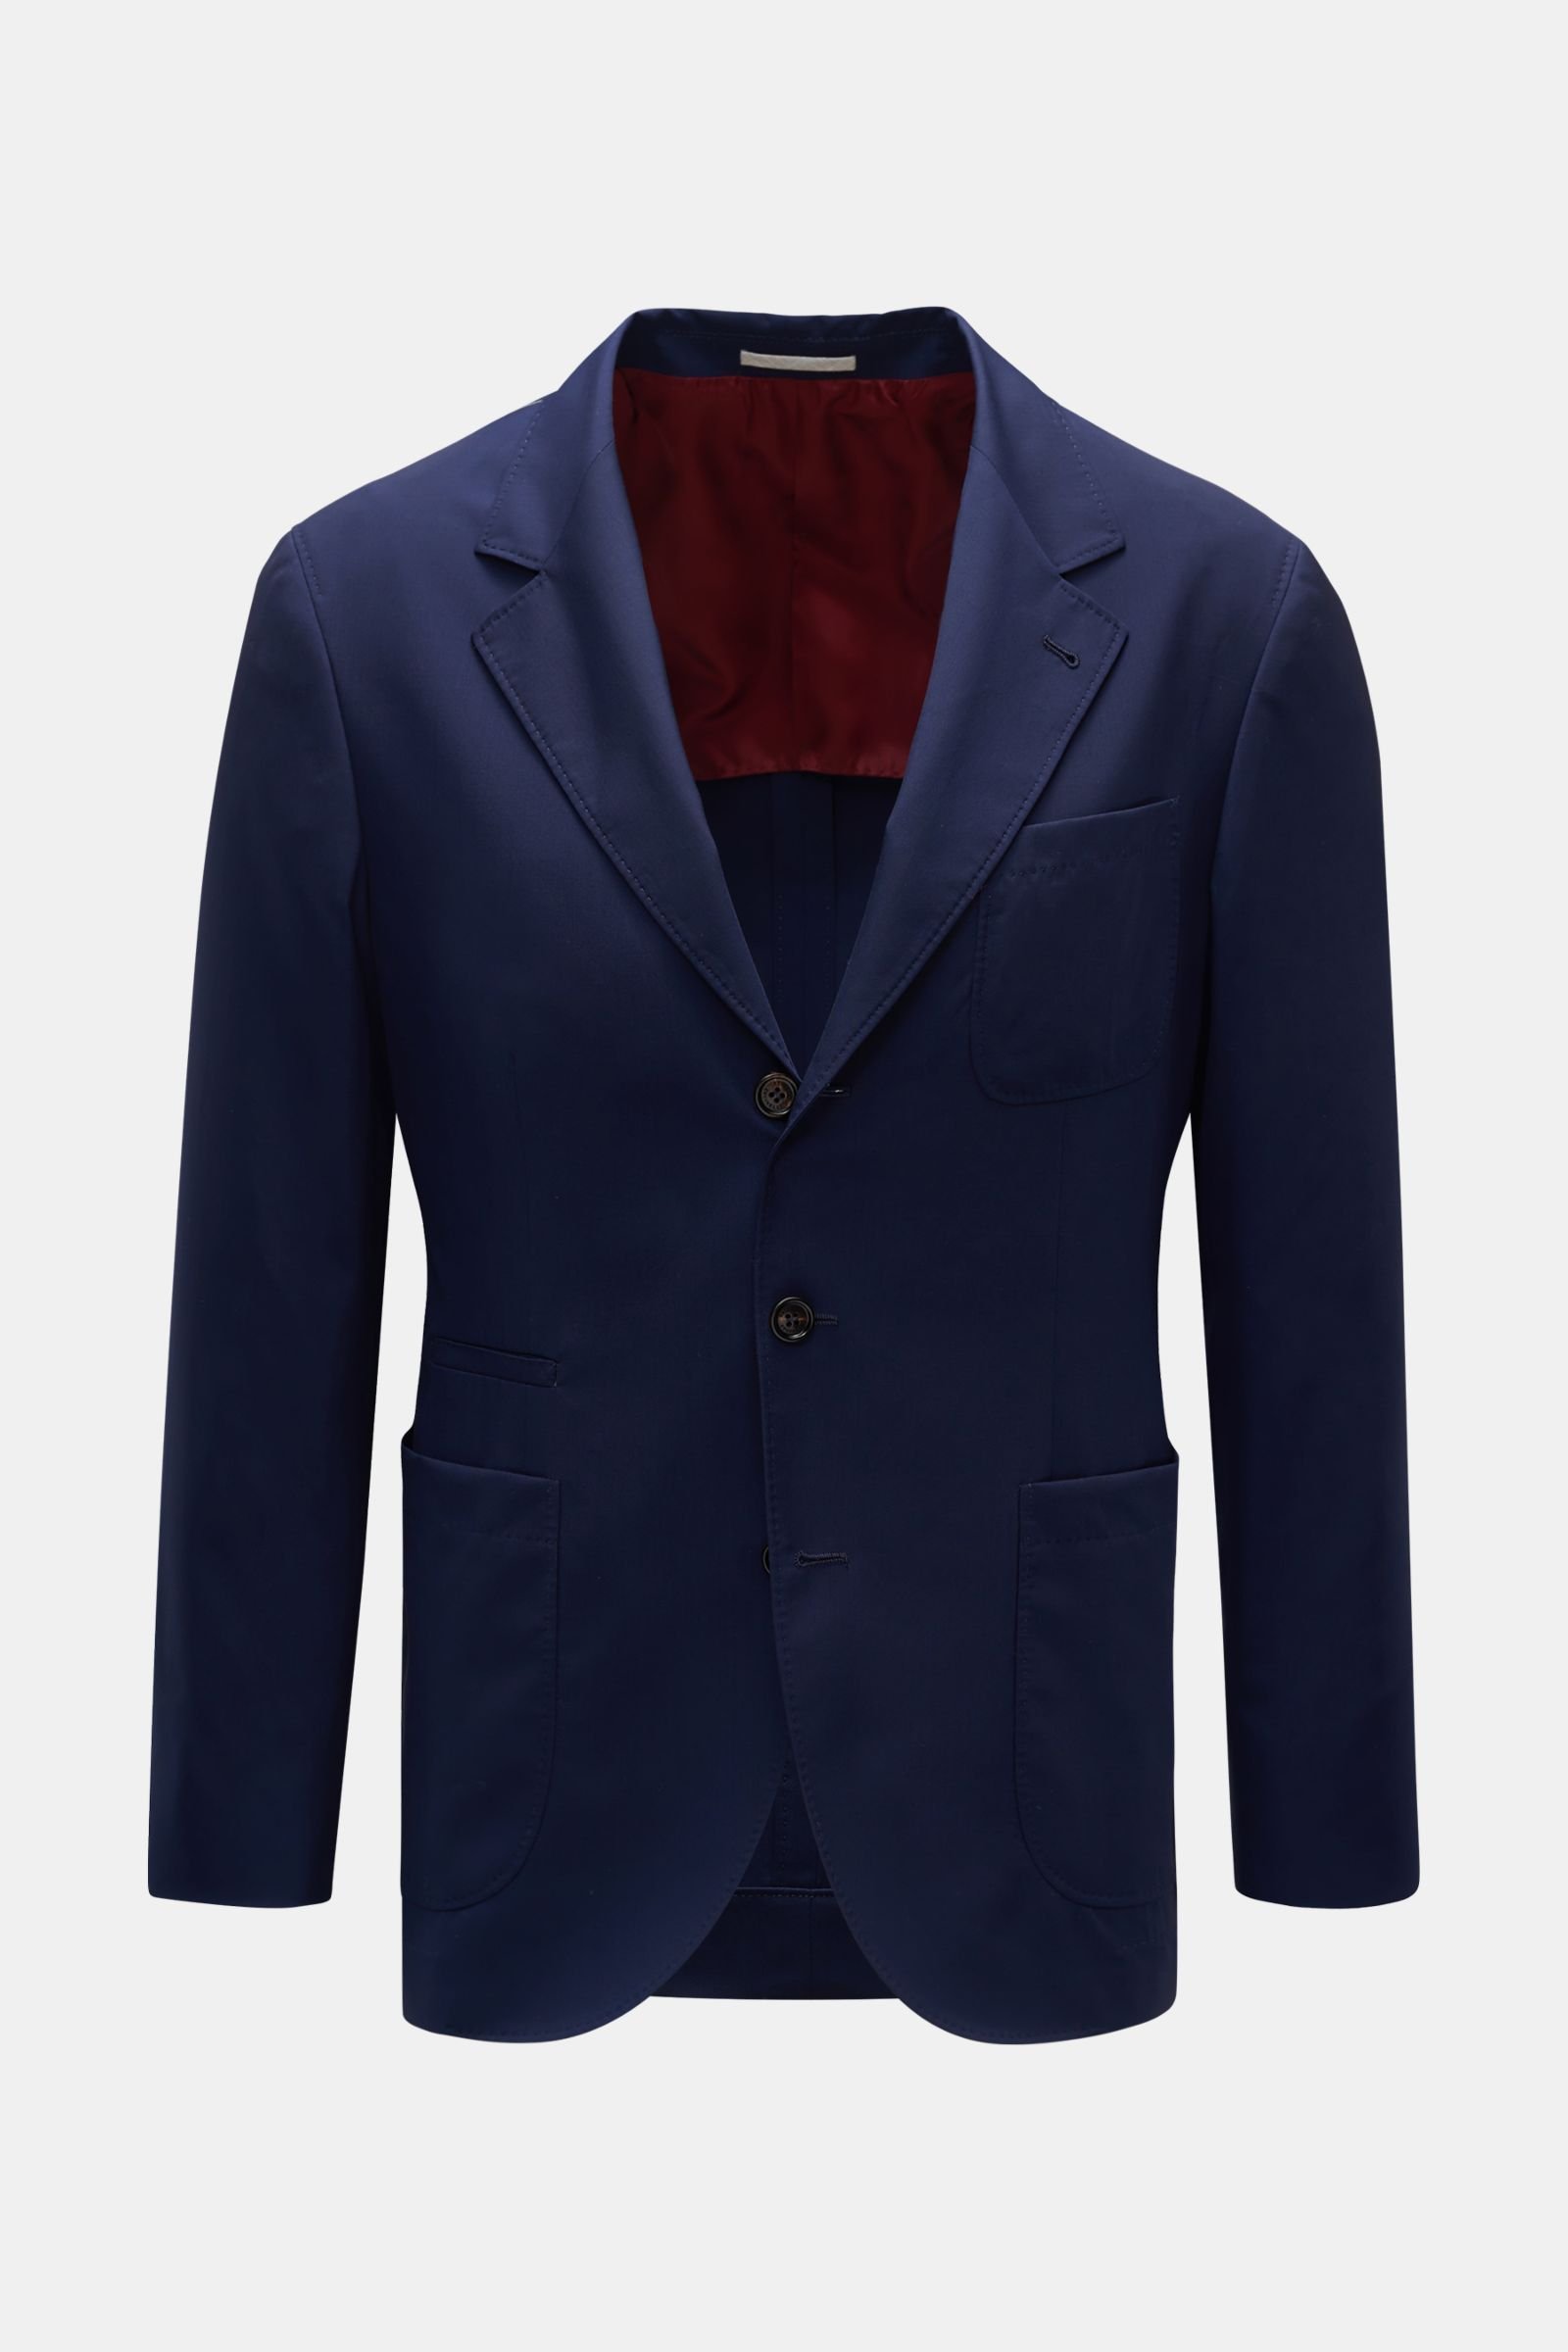 Smart-casual jacket dark blue